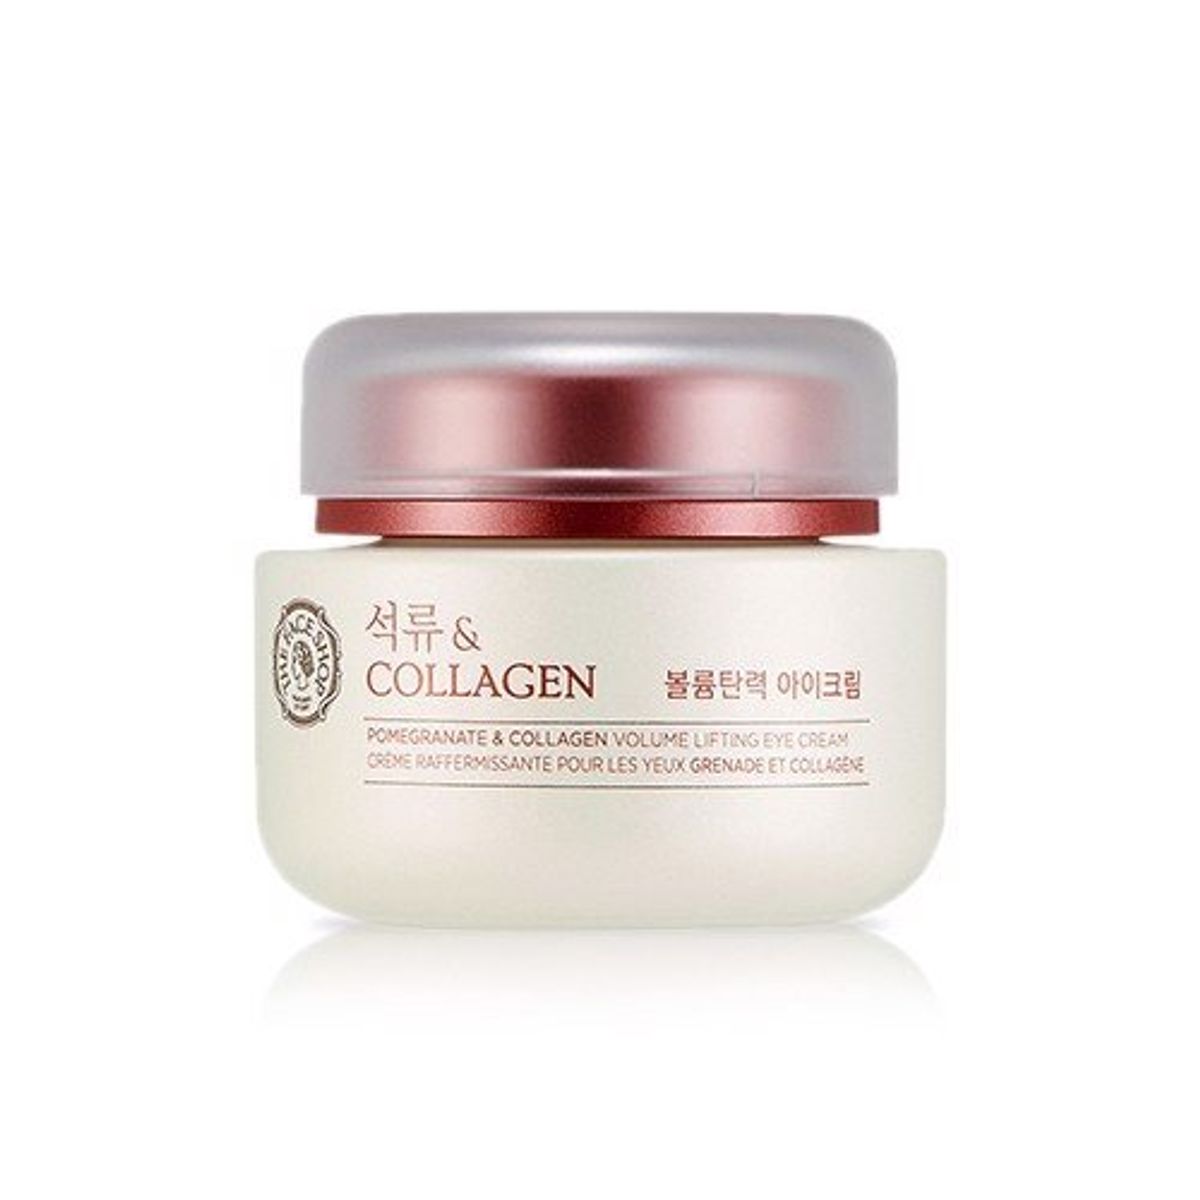 gift-kem-duong-mat-giup-da-san-min-pomegranate-and-collagen-volume-lifting-eye-cream-1